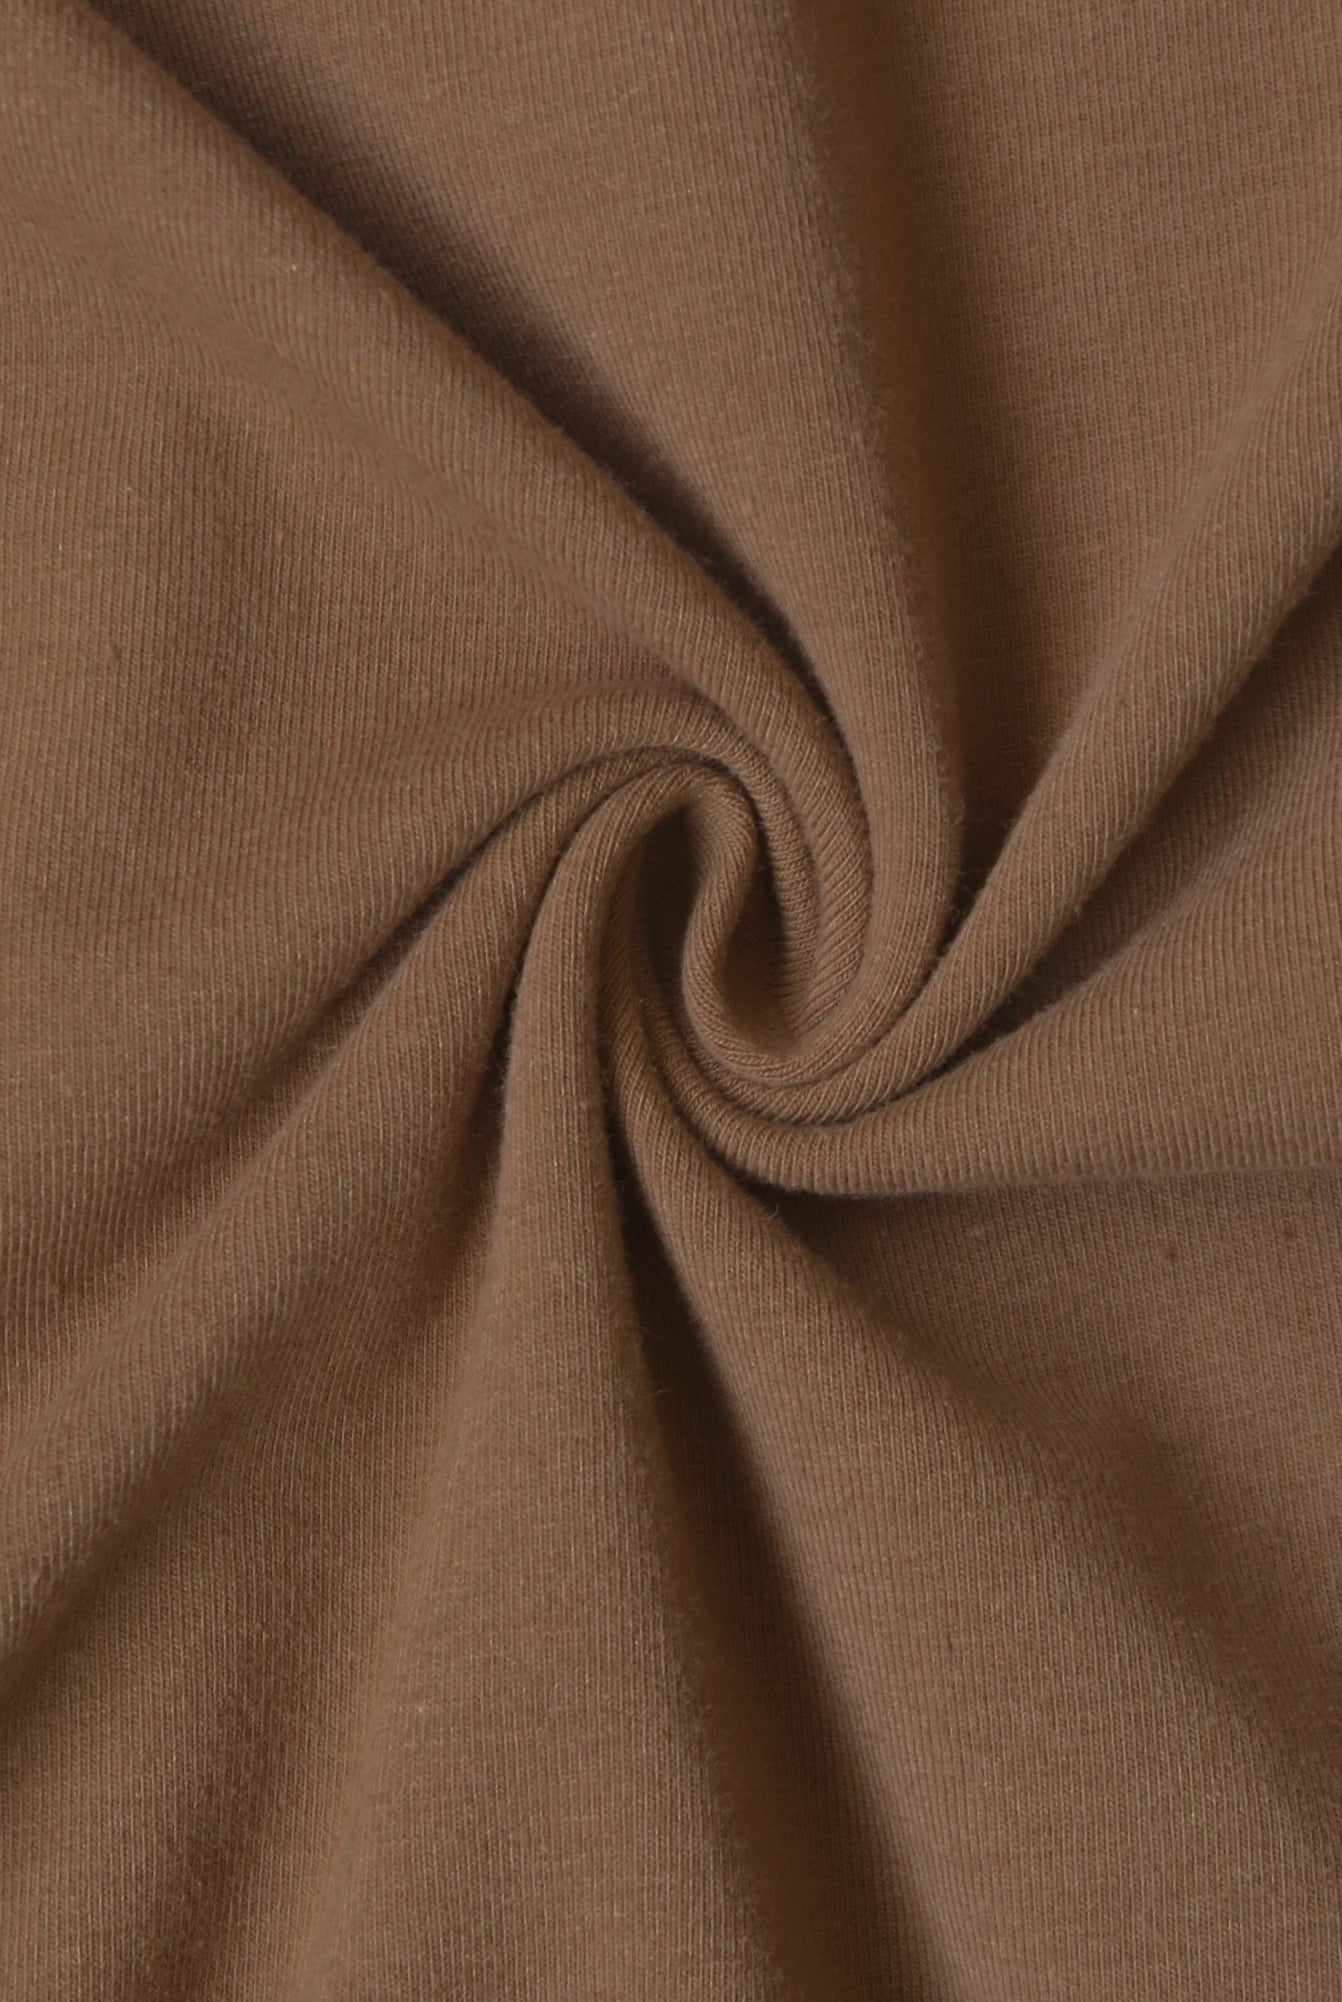 Mocha Brown, Solid Cotton Spandex Knit Fabric, 10 oz. - Boho Fabrics